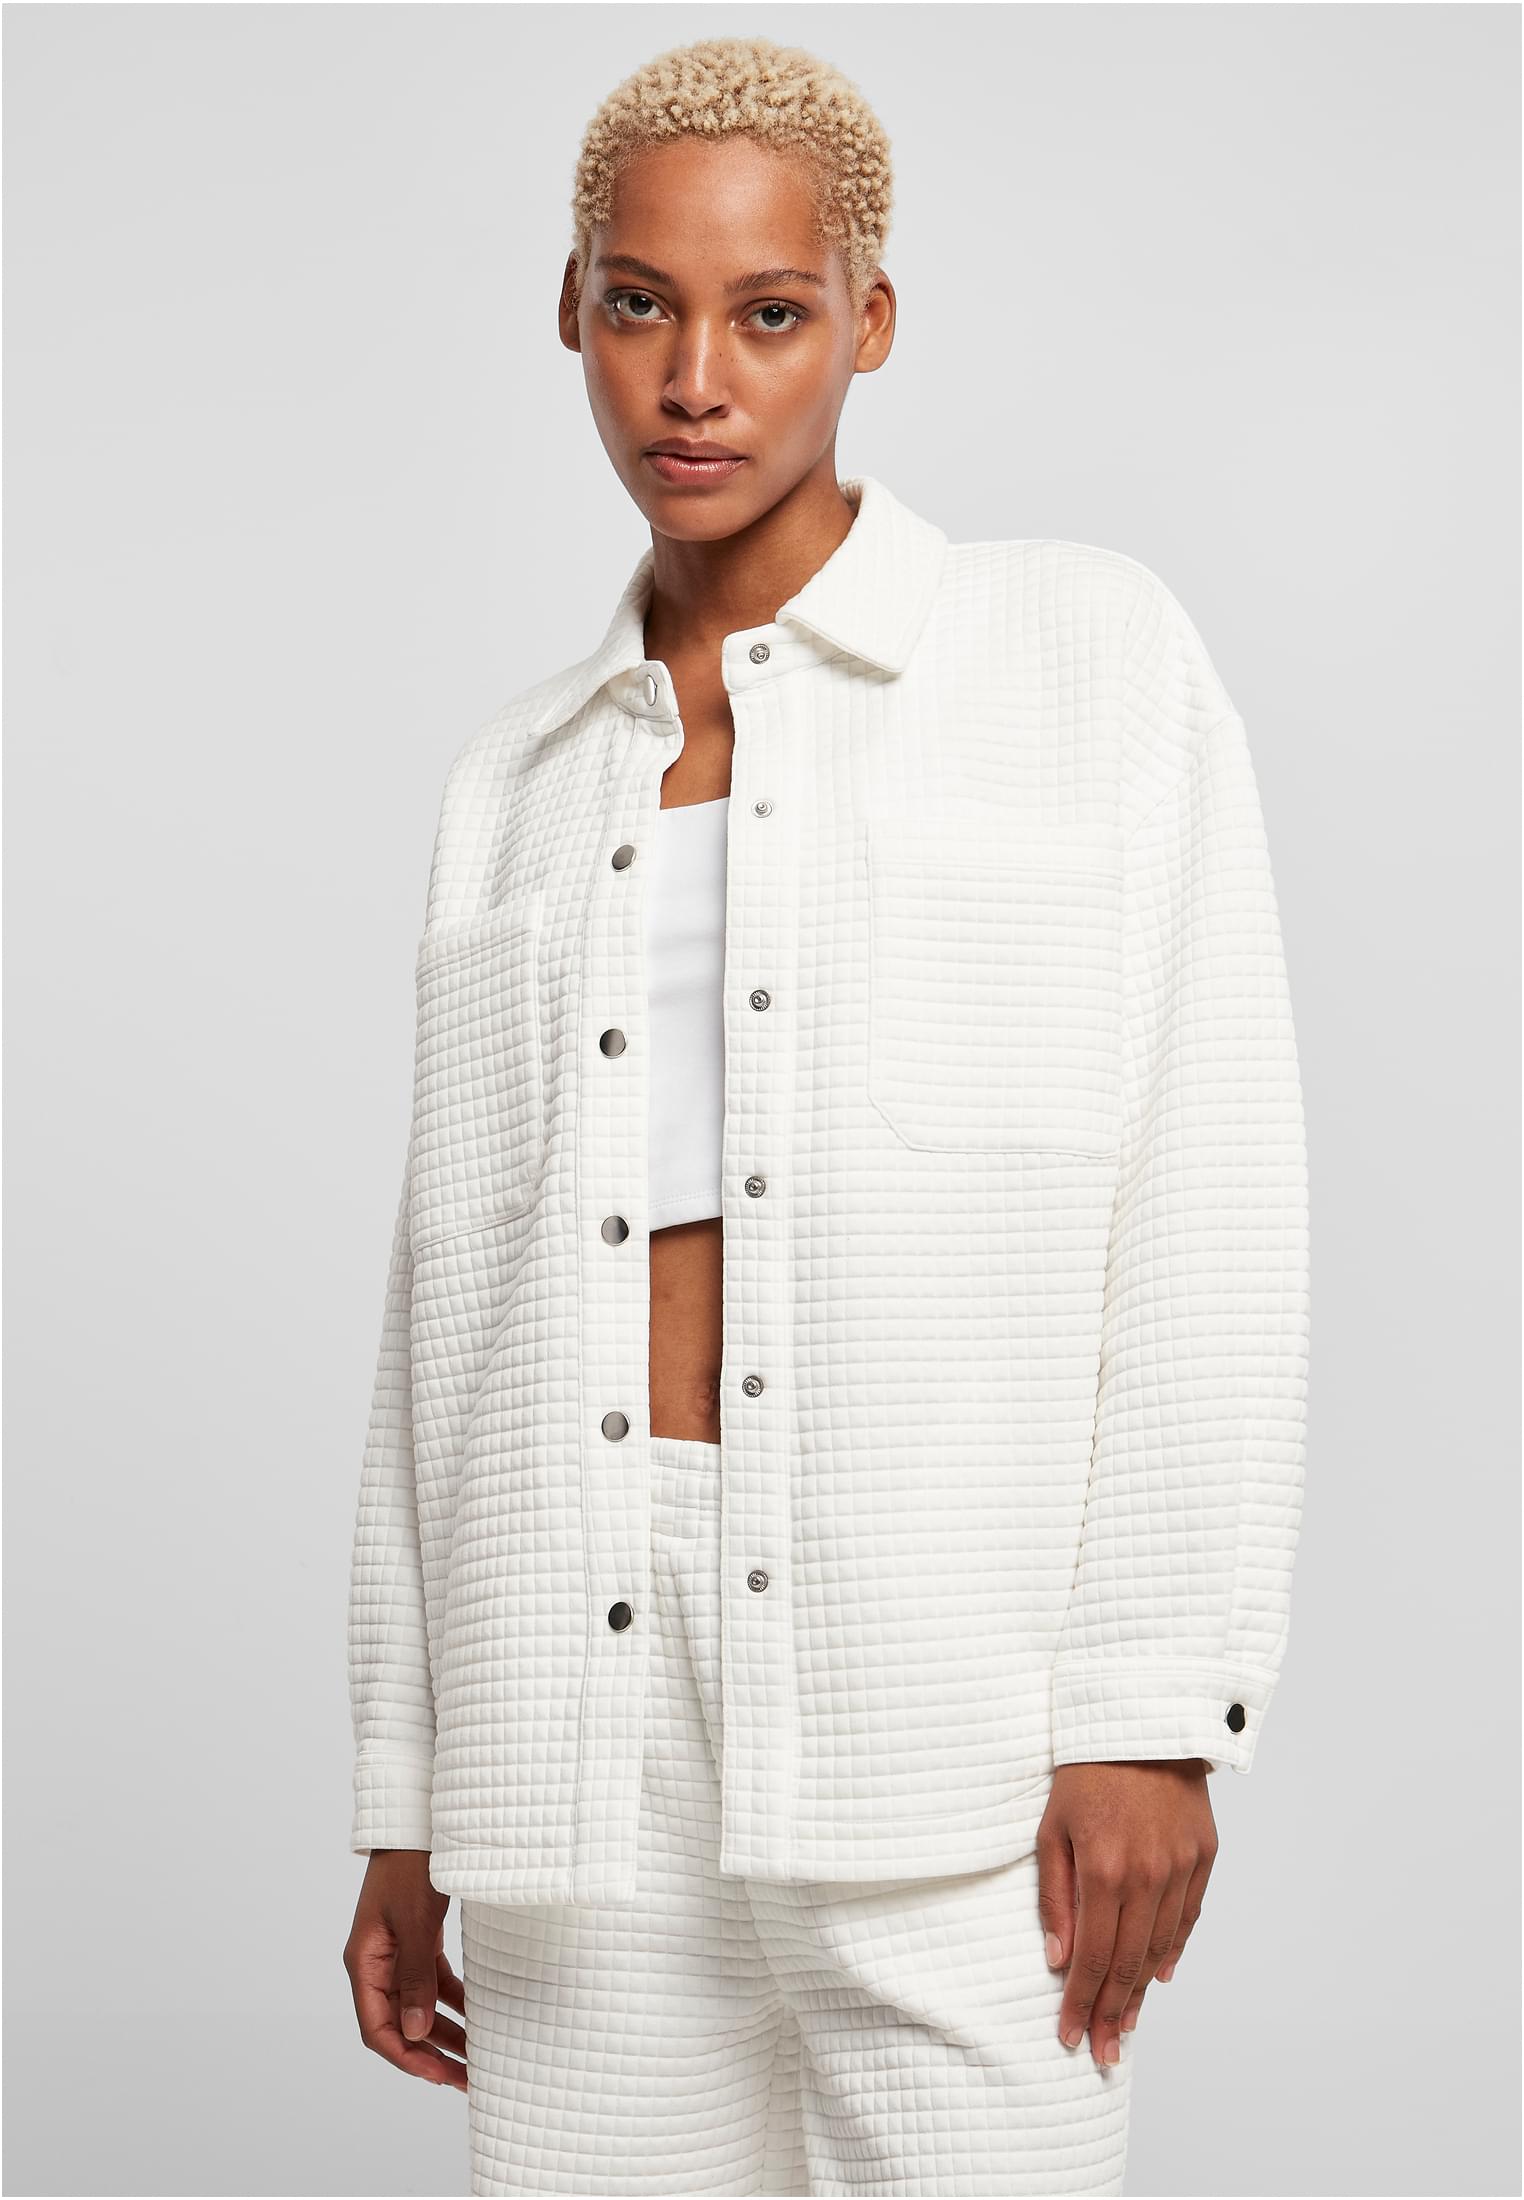 Women's quilted sweatshirt white